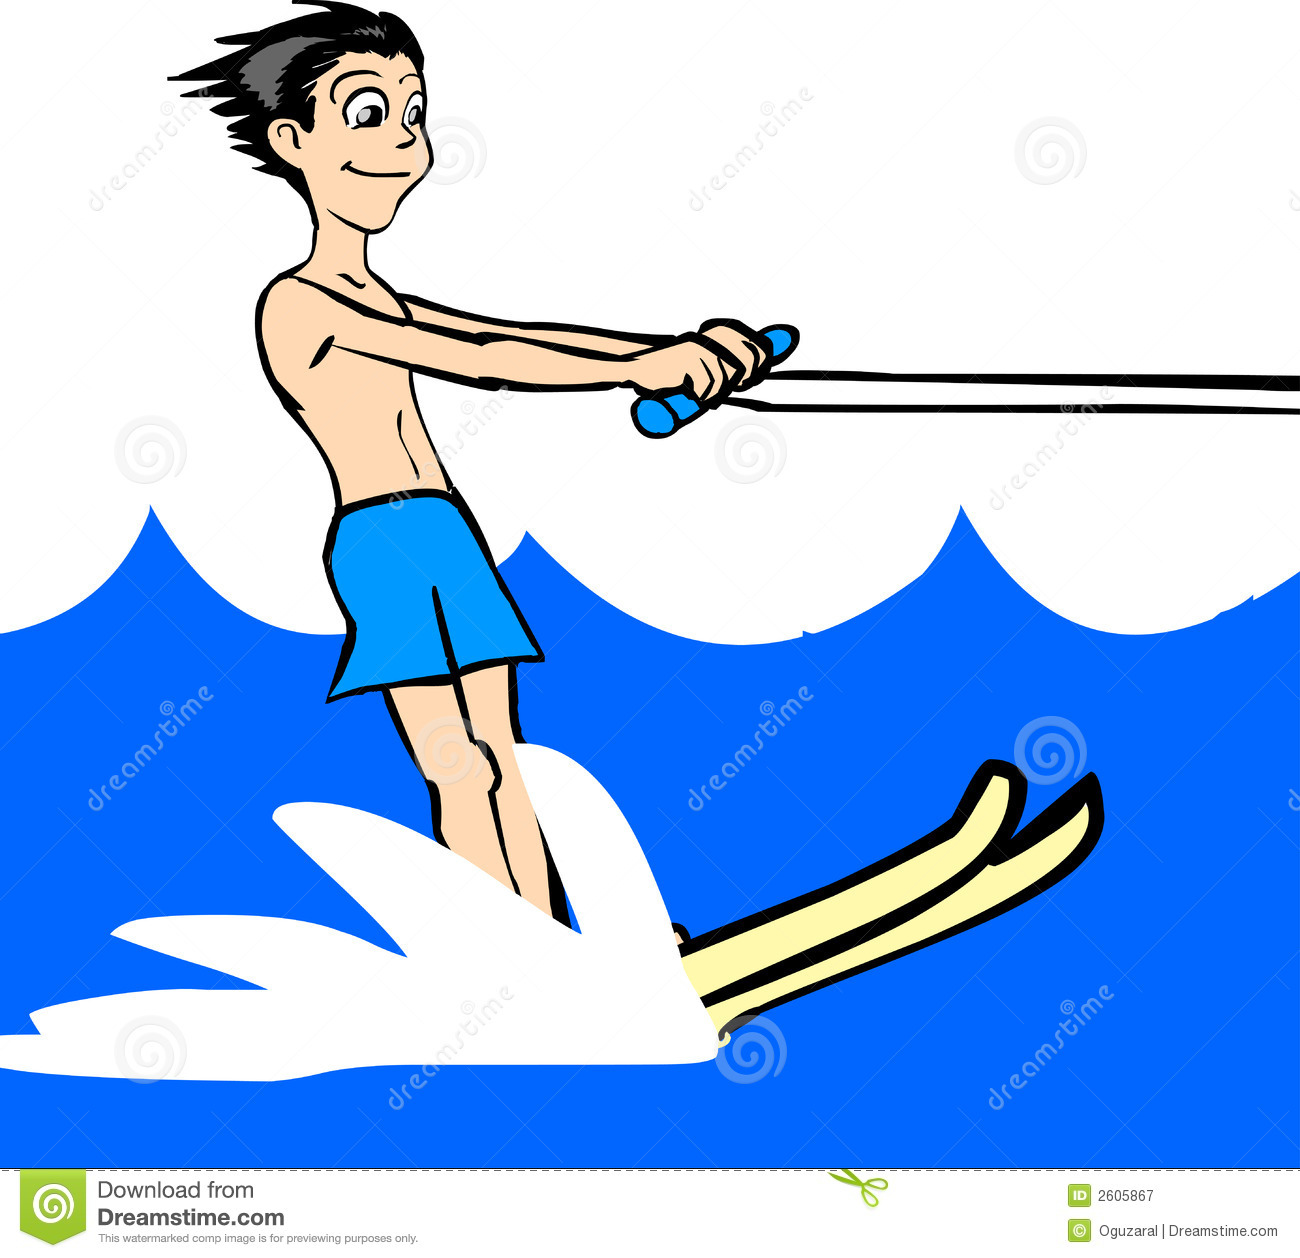 Vector Illustration Of Man Doing Water Ski